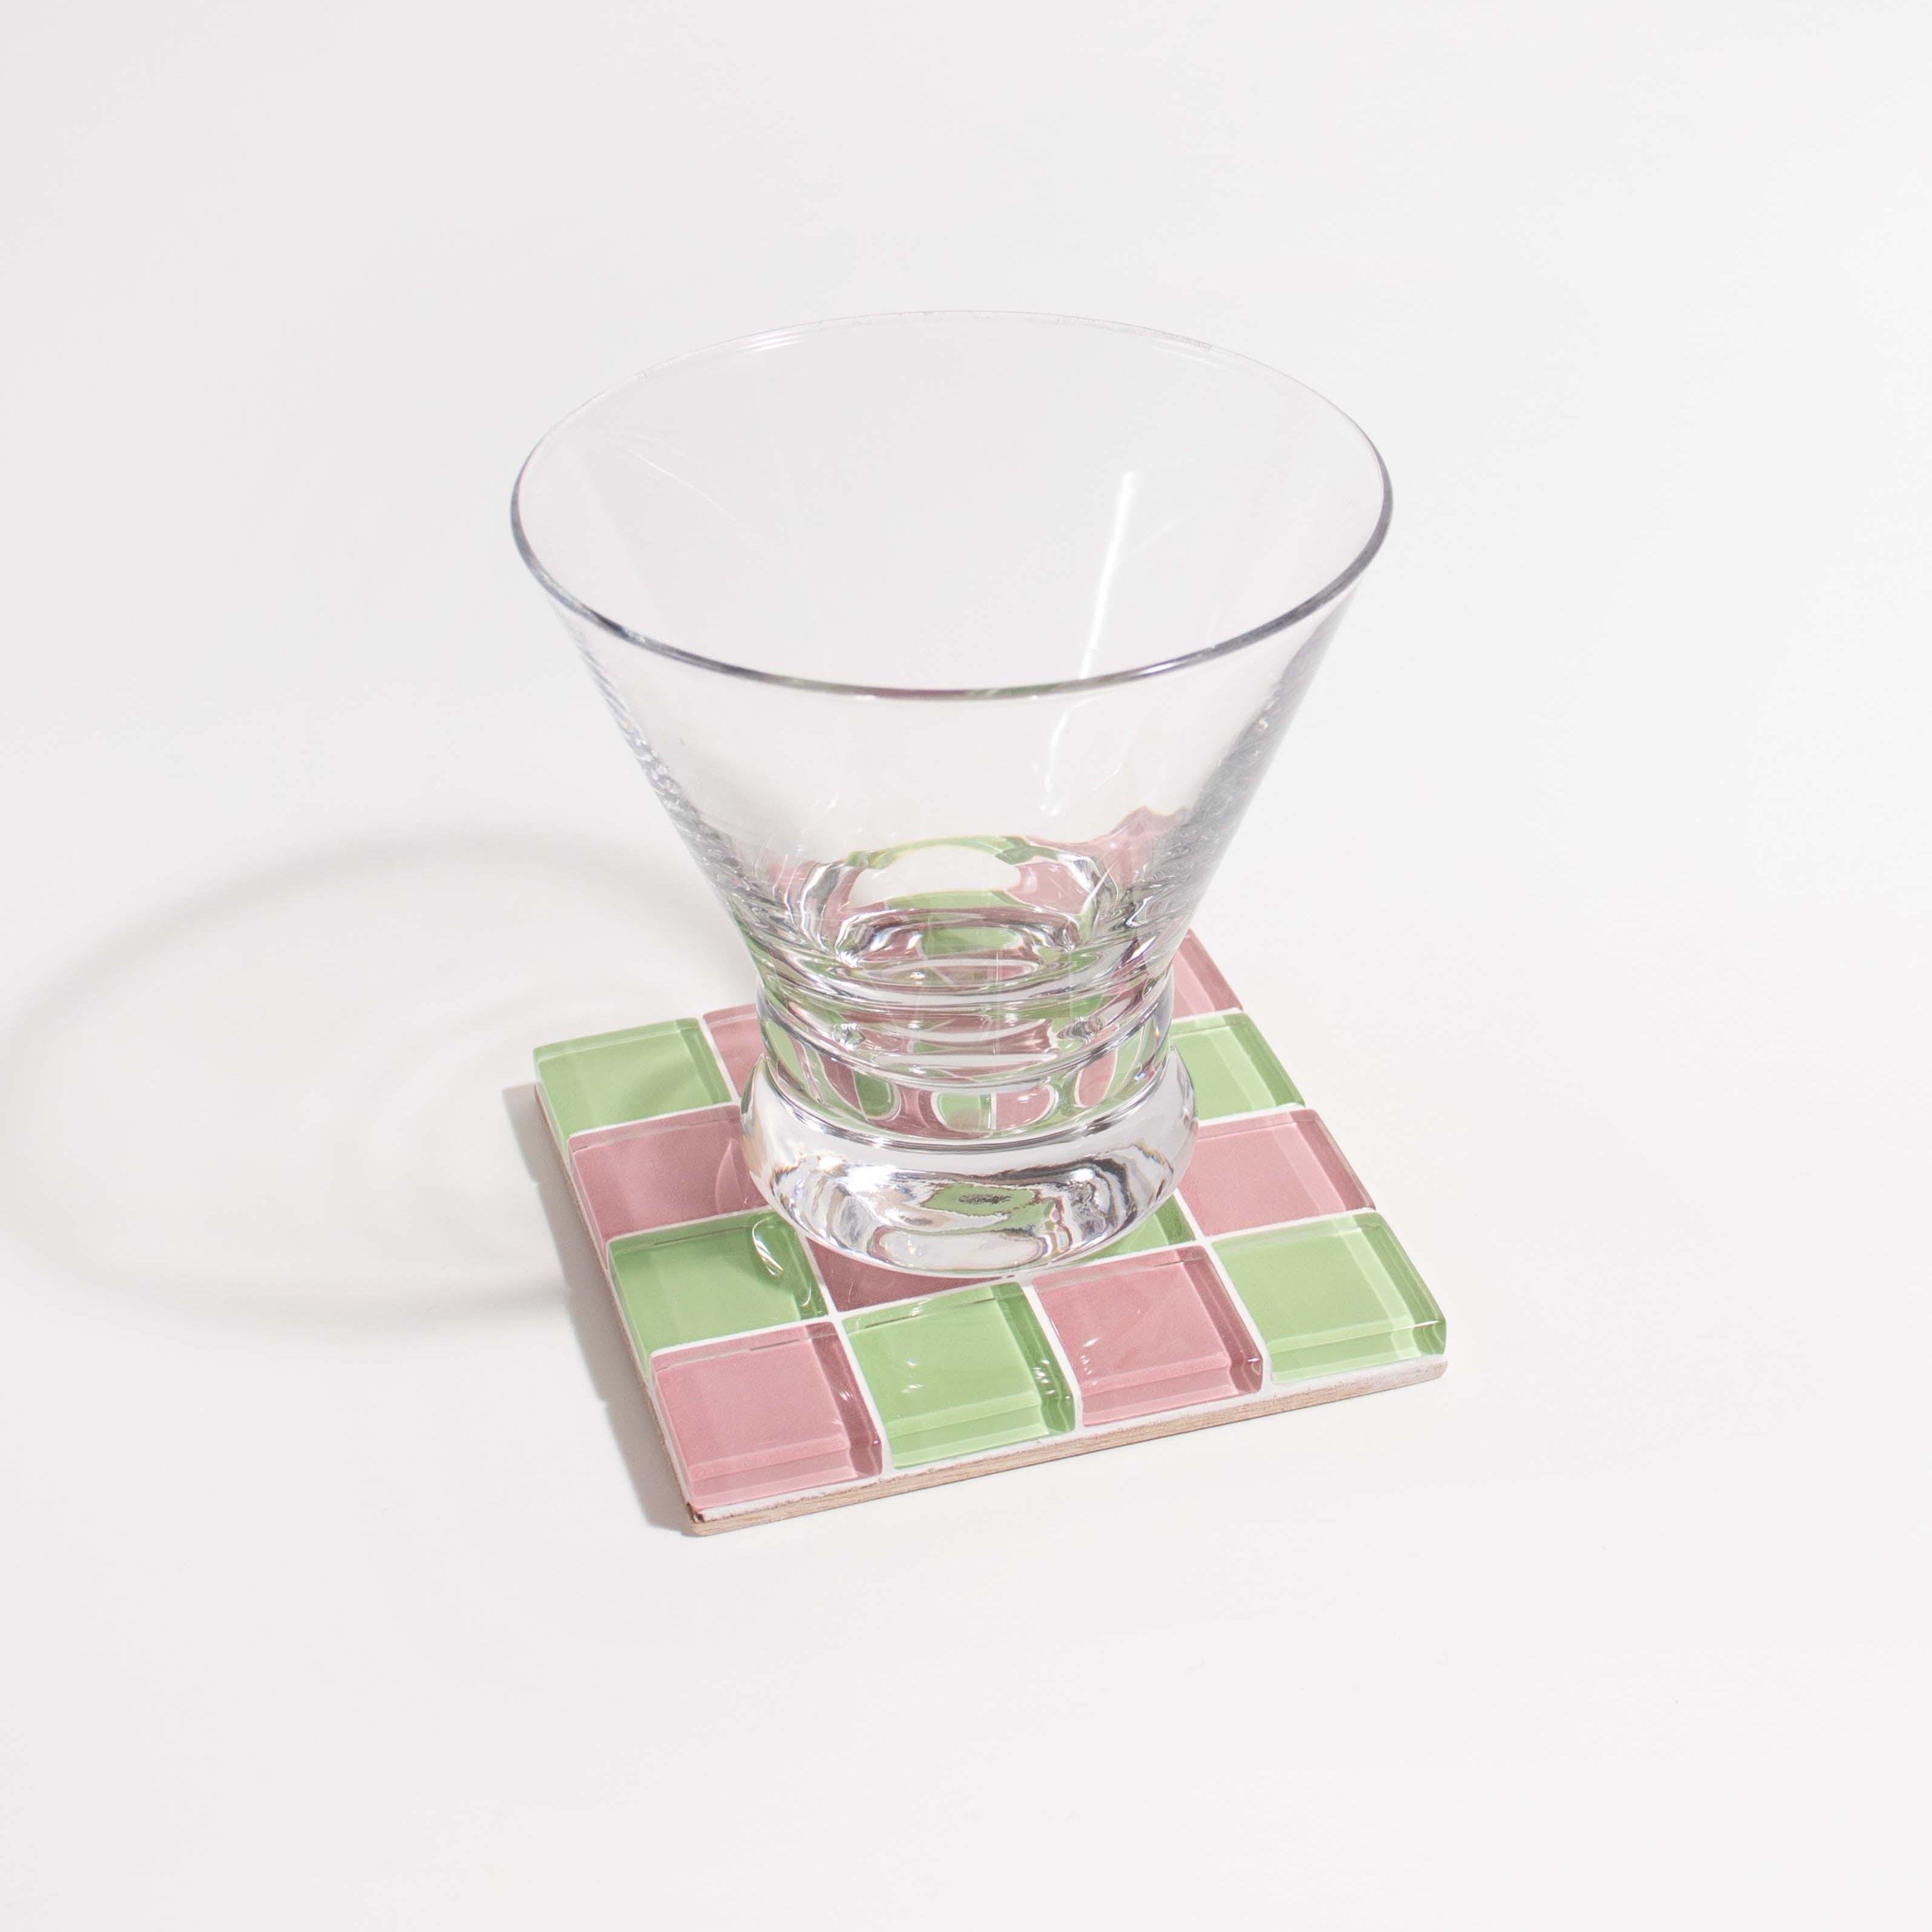 Glass Tile Coaster - Pink Guava by Subtle Art Studios